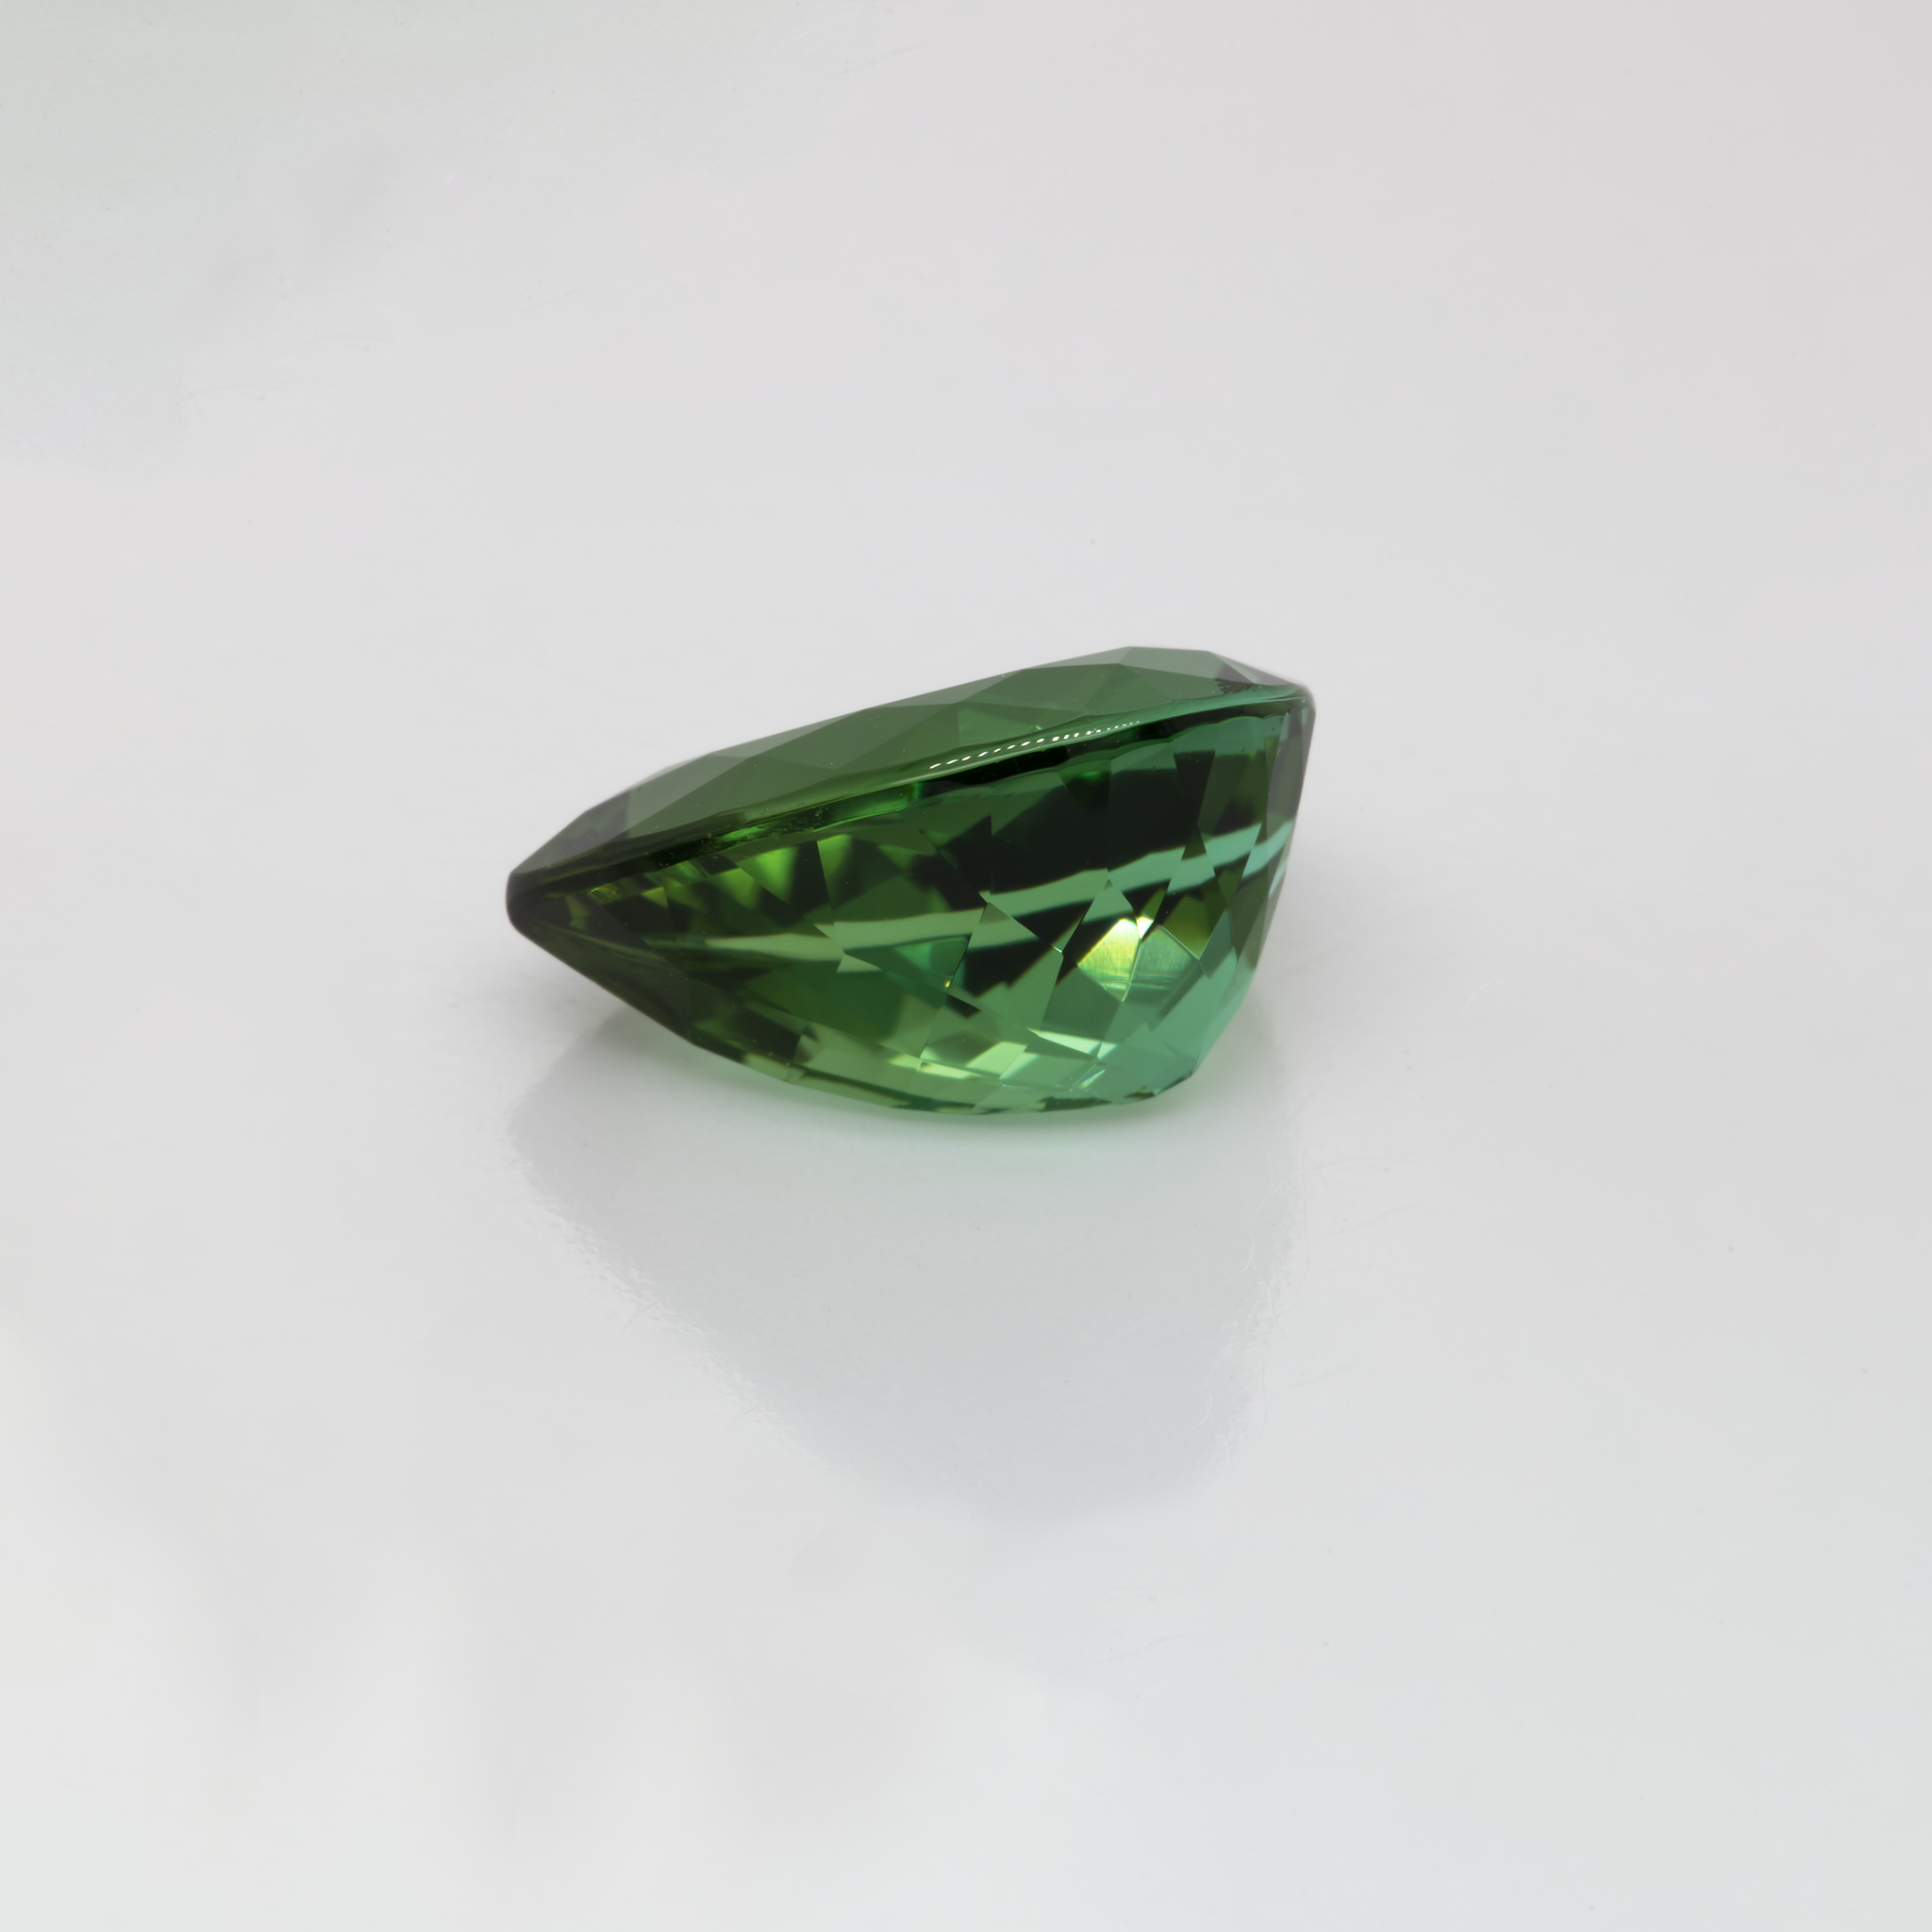 Tourmaline - green, pearhape, 14x10 mm, 5.98 cts, No. TR991019